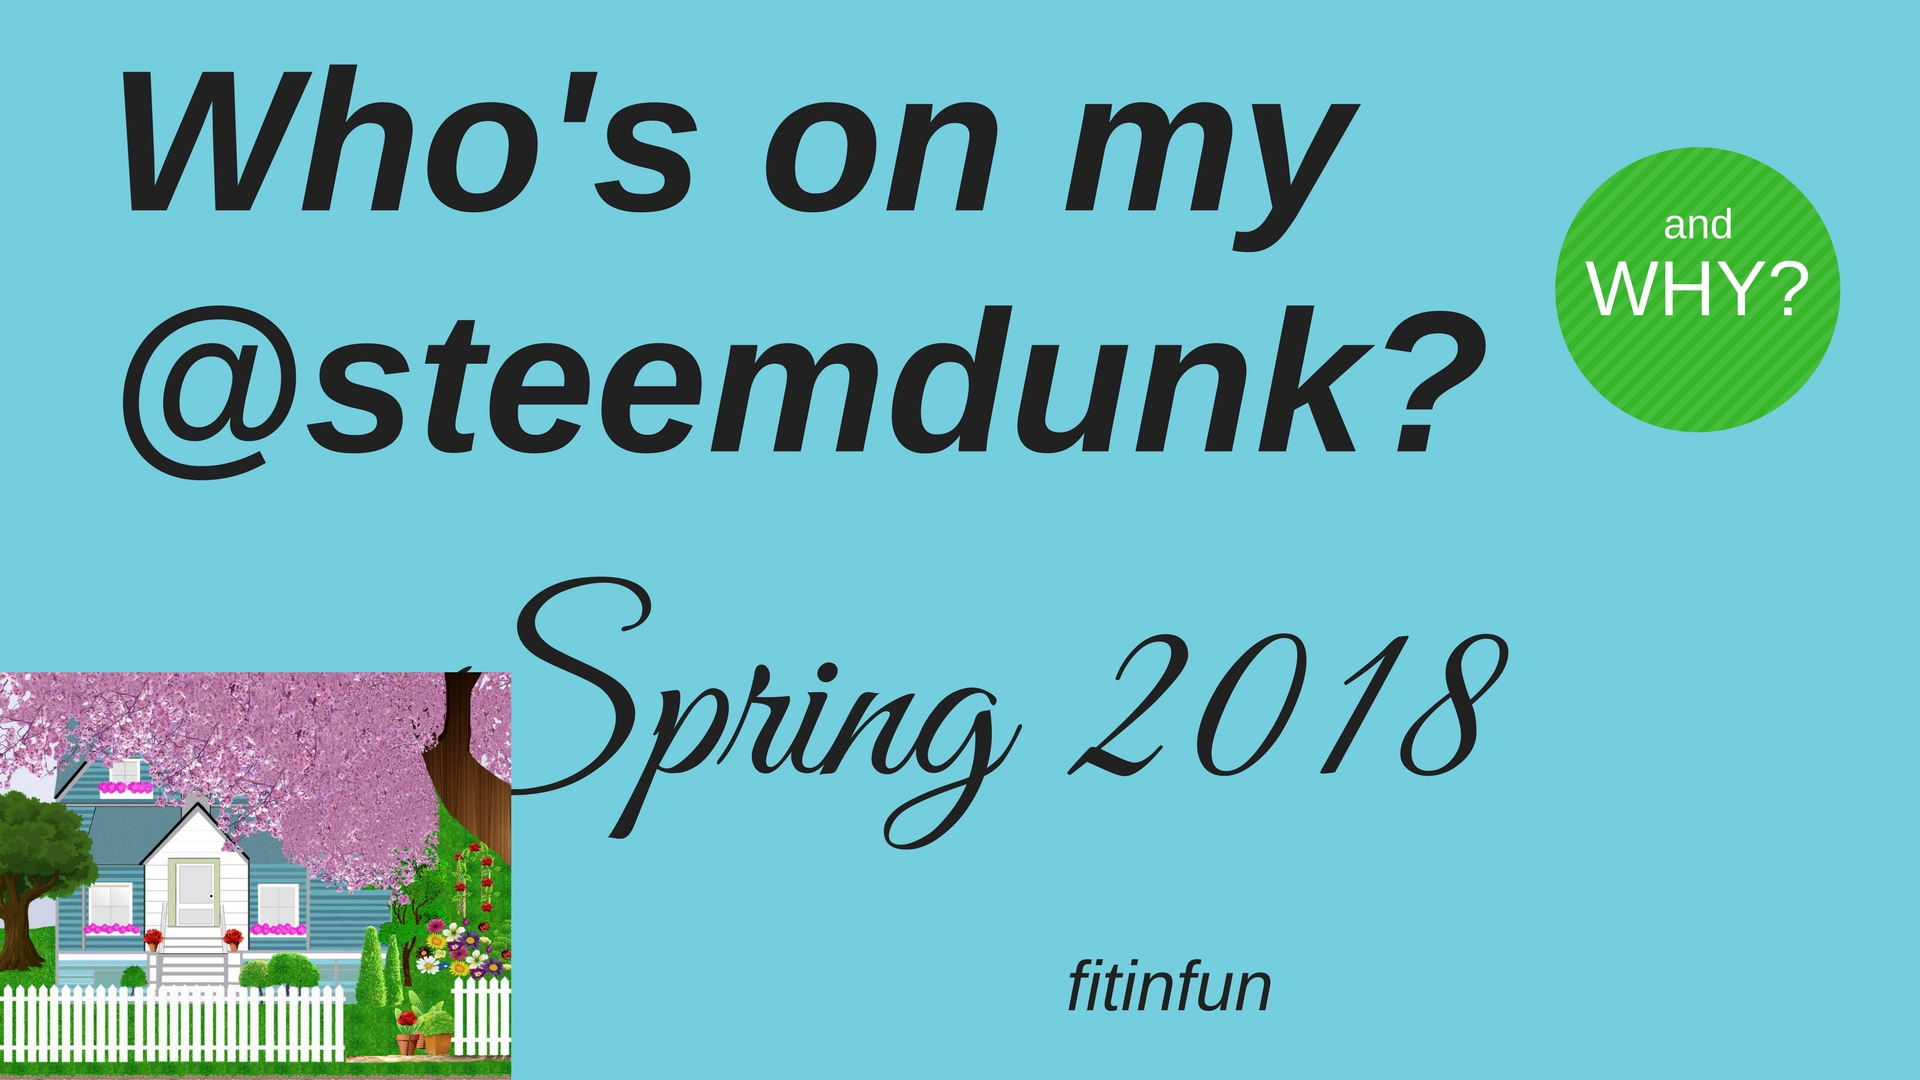 Who's on my steemdunk spring 2018 fitinfun.jpg